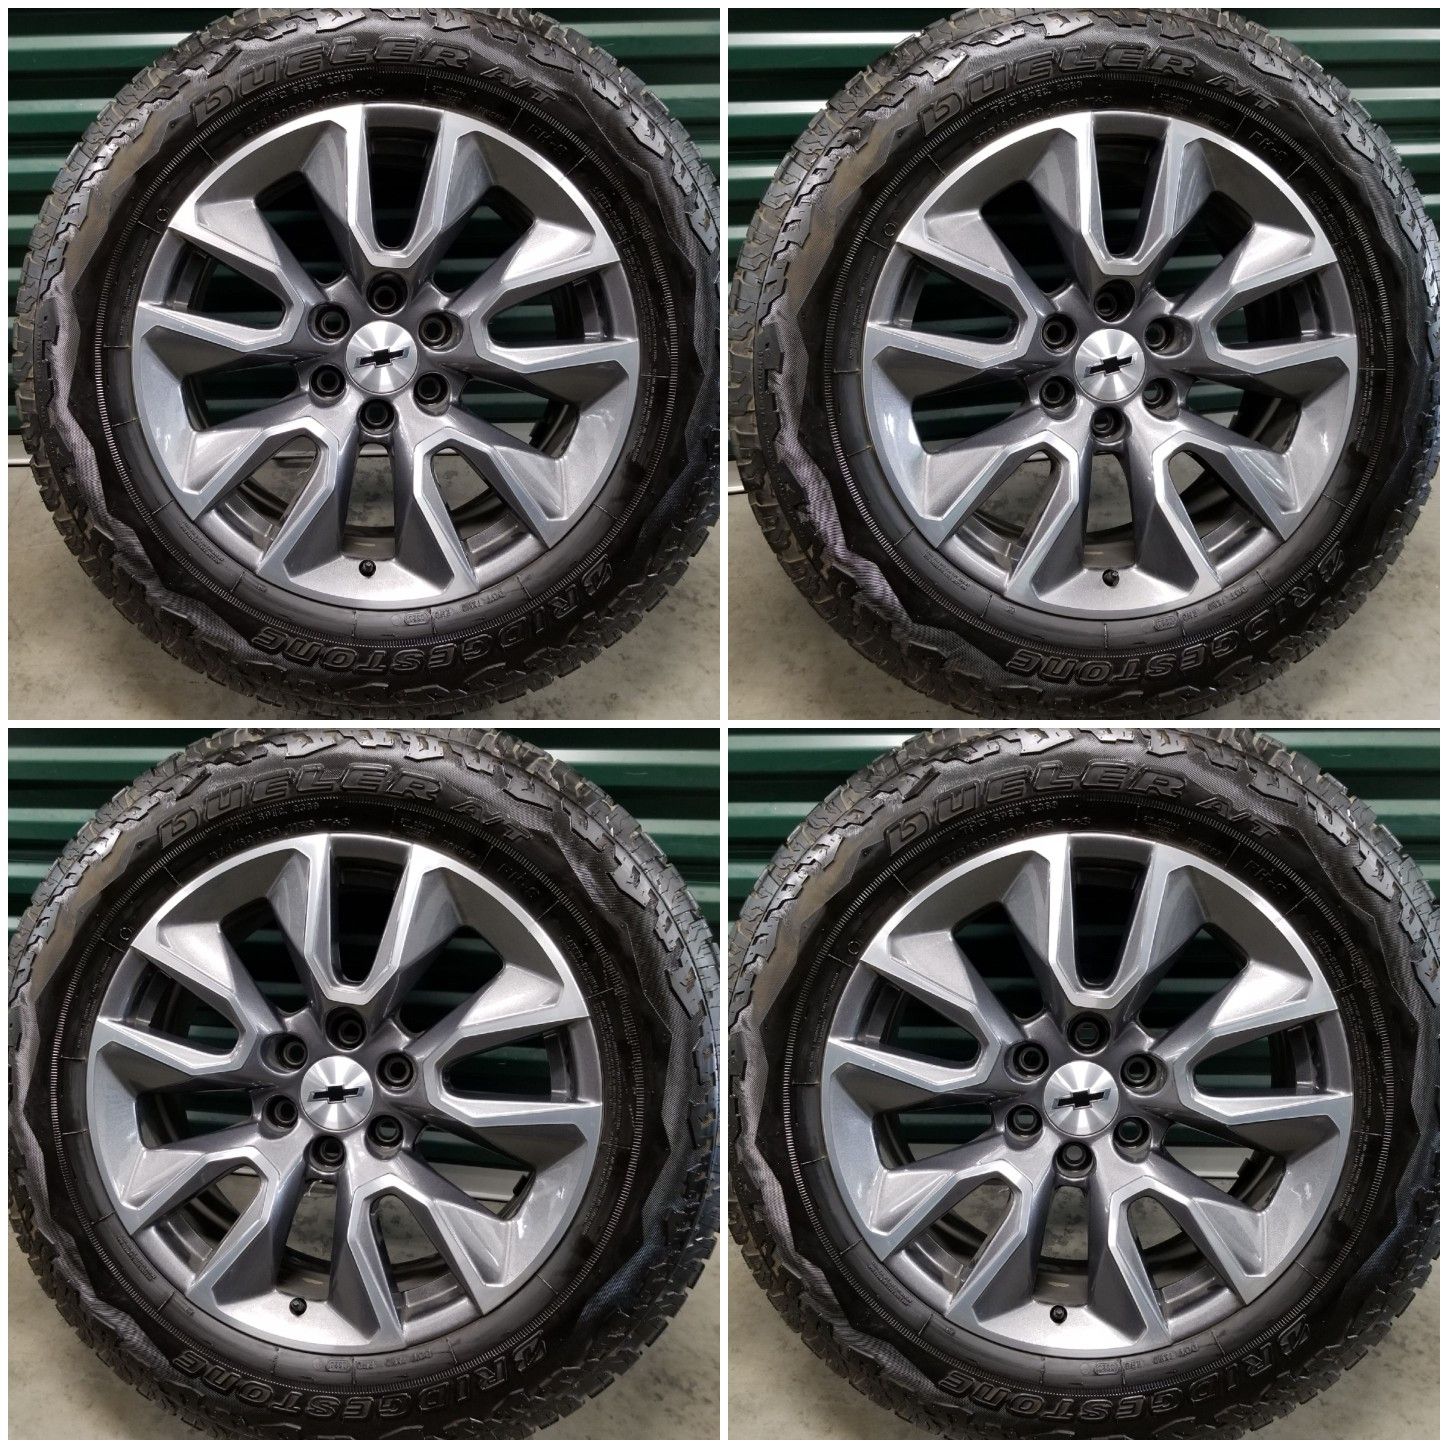 New Silverado Chevy RST 4x4 Wheels Rims Tires